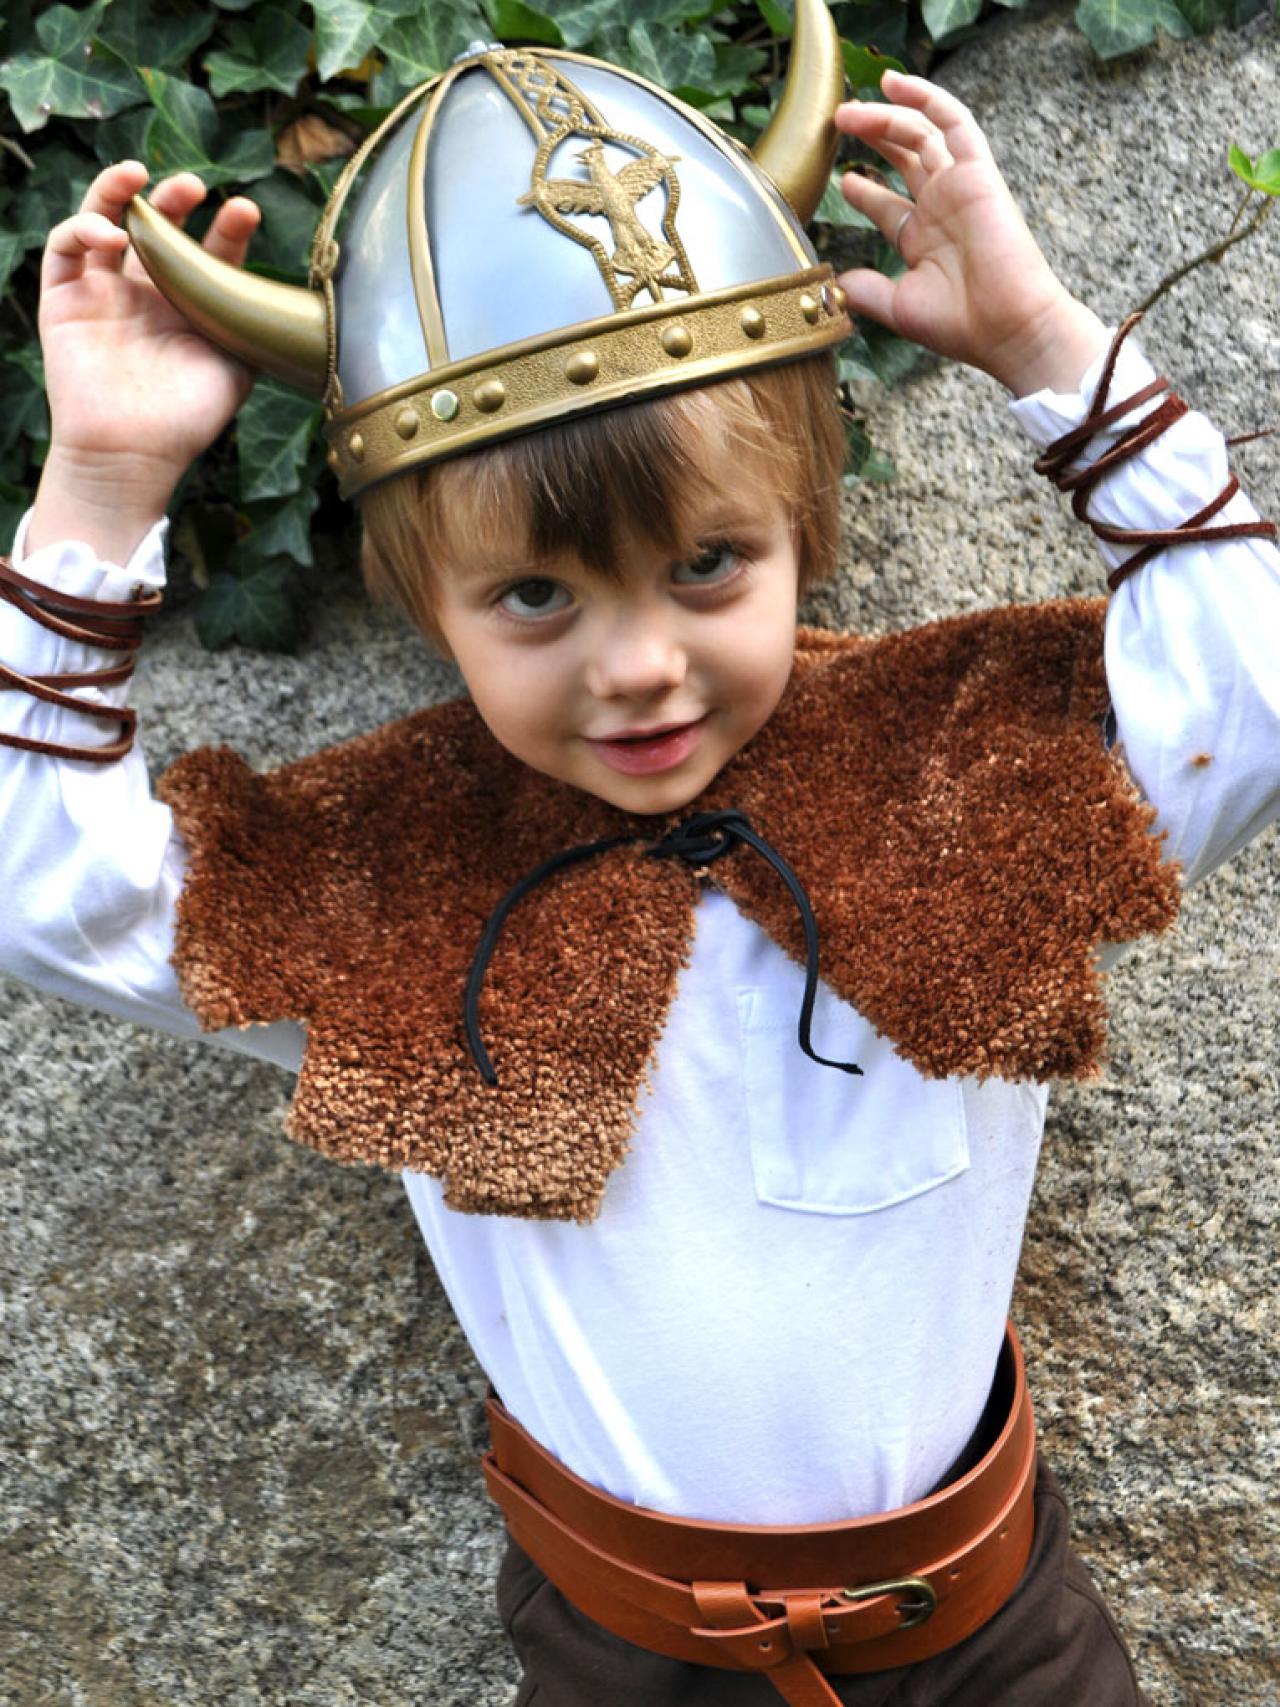 Did Viking celebrate Halloween?